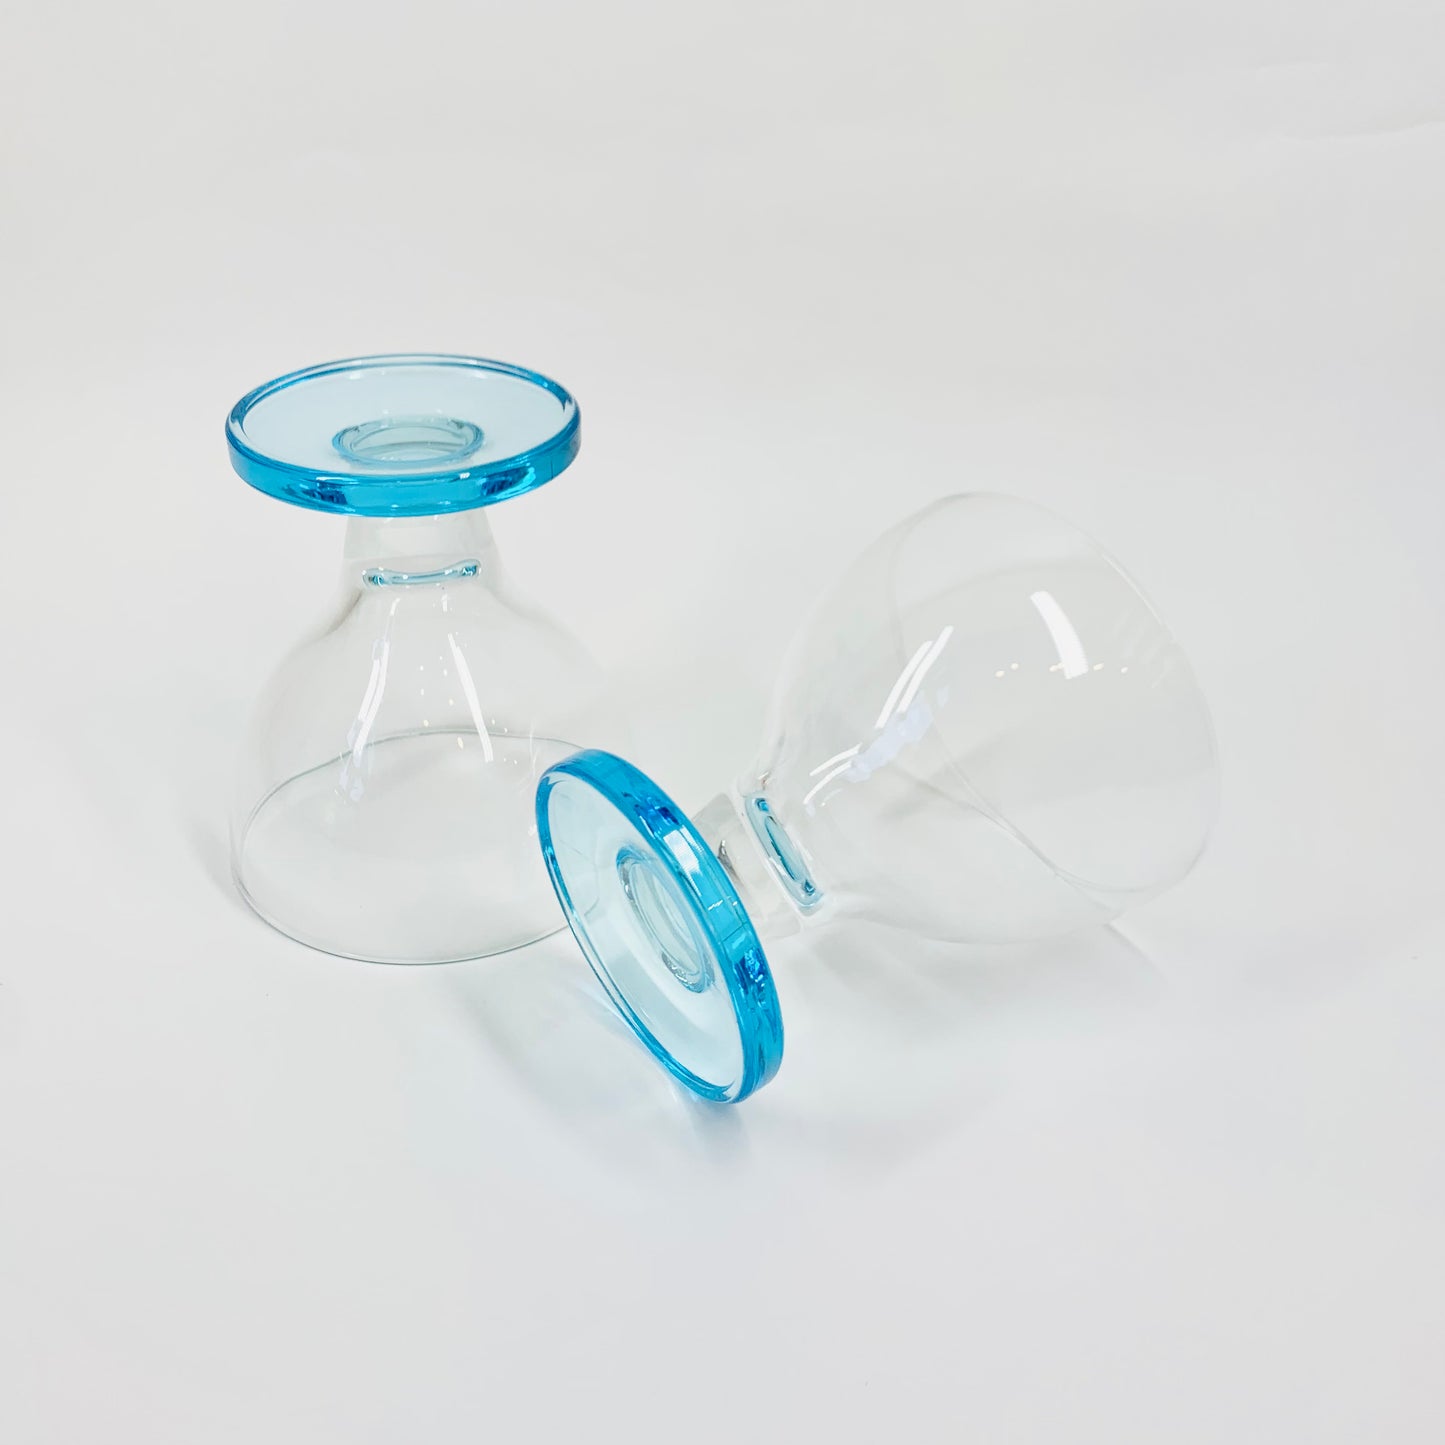 1980s blue round base glass goblets